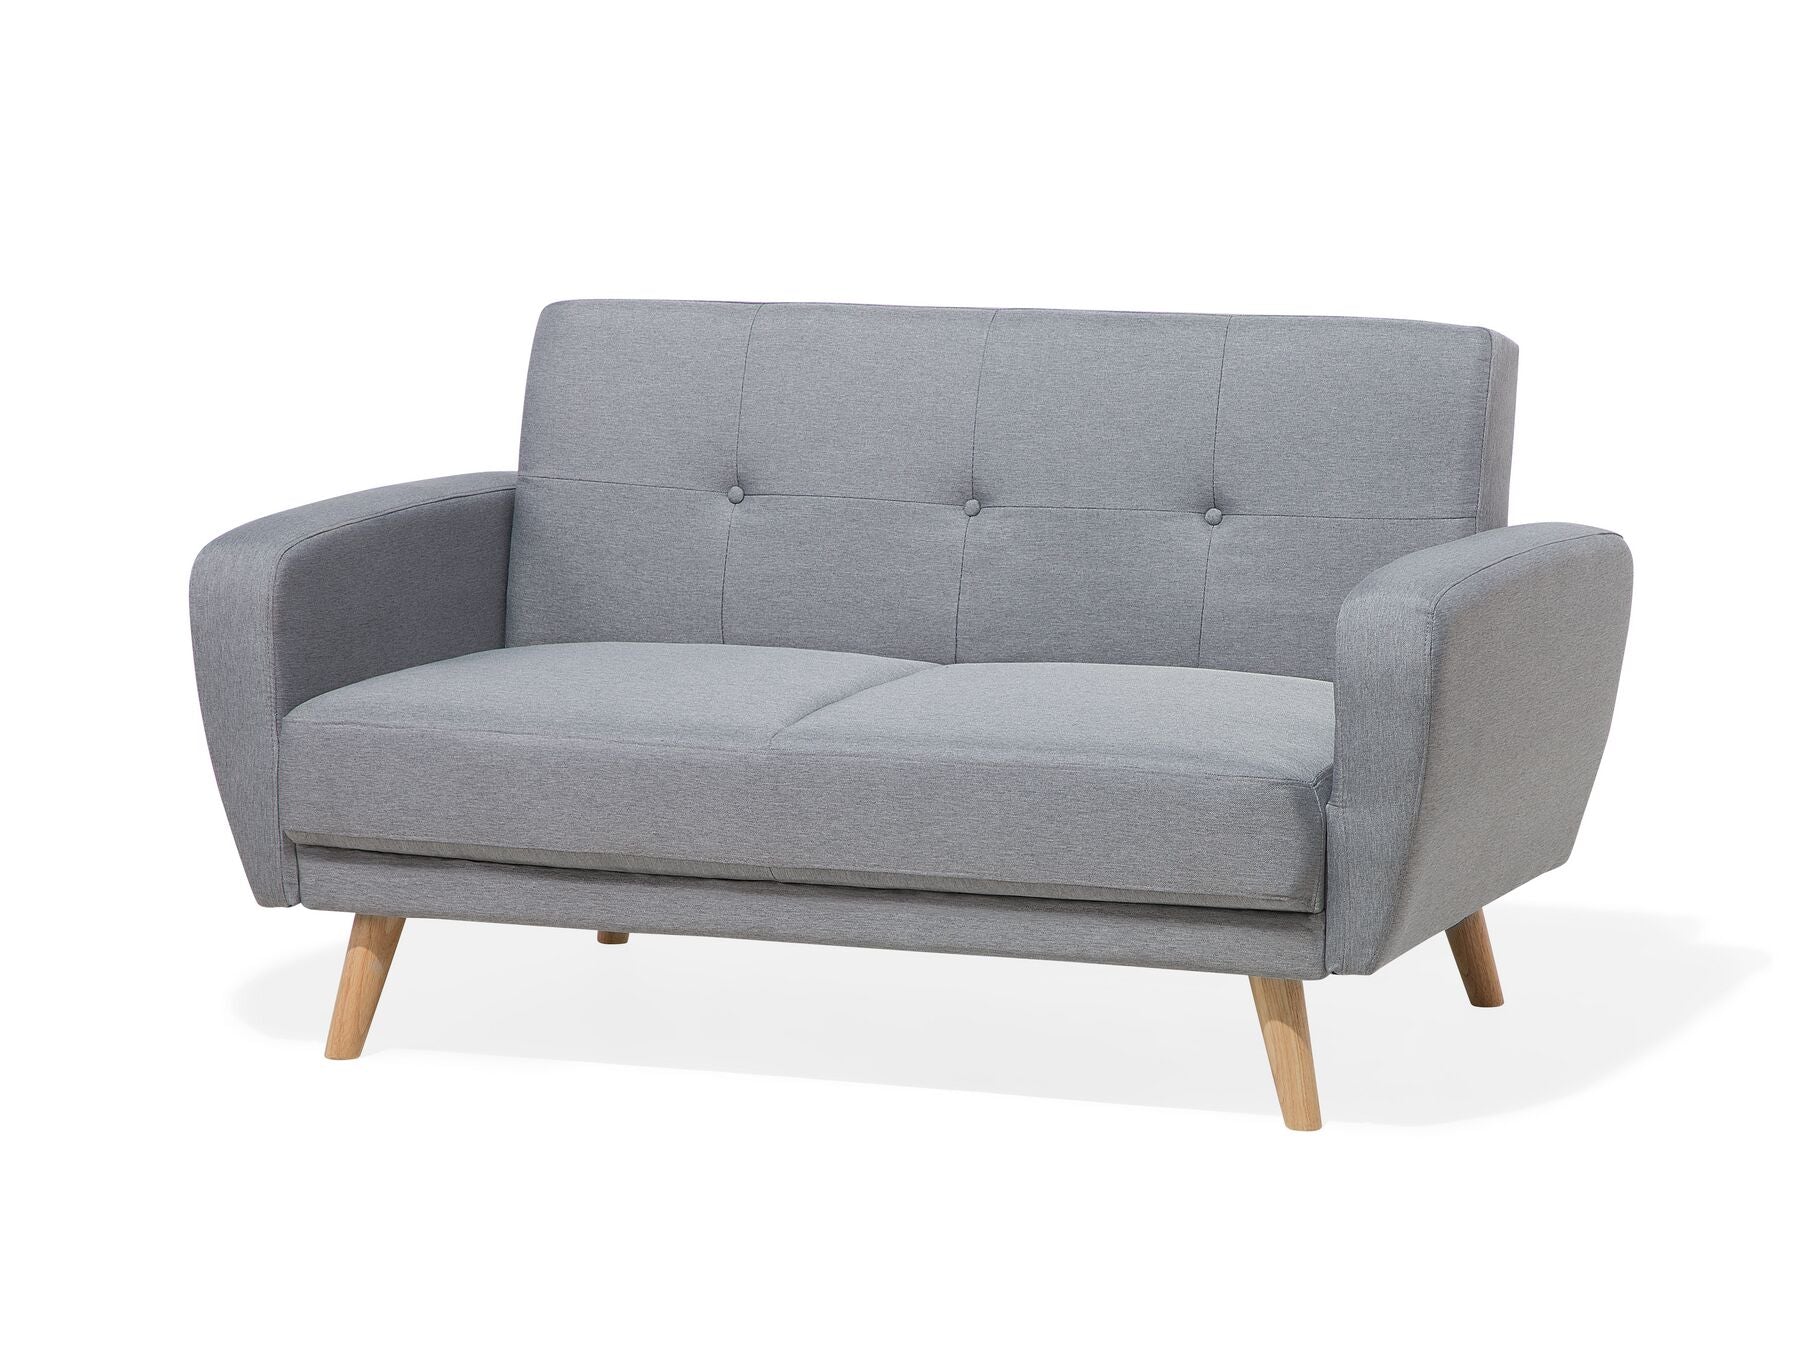 8 Seater Sofa Set: Grey Fabric Living Room Sofa Set